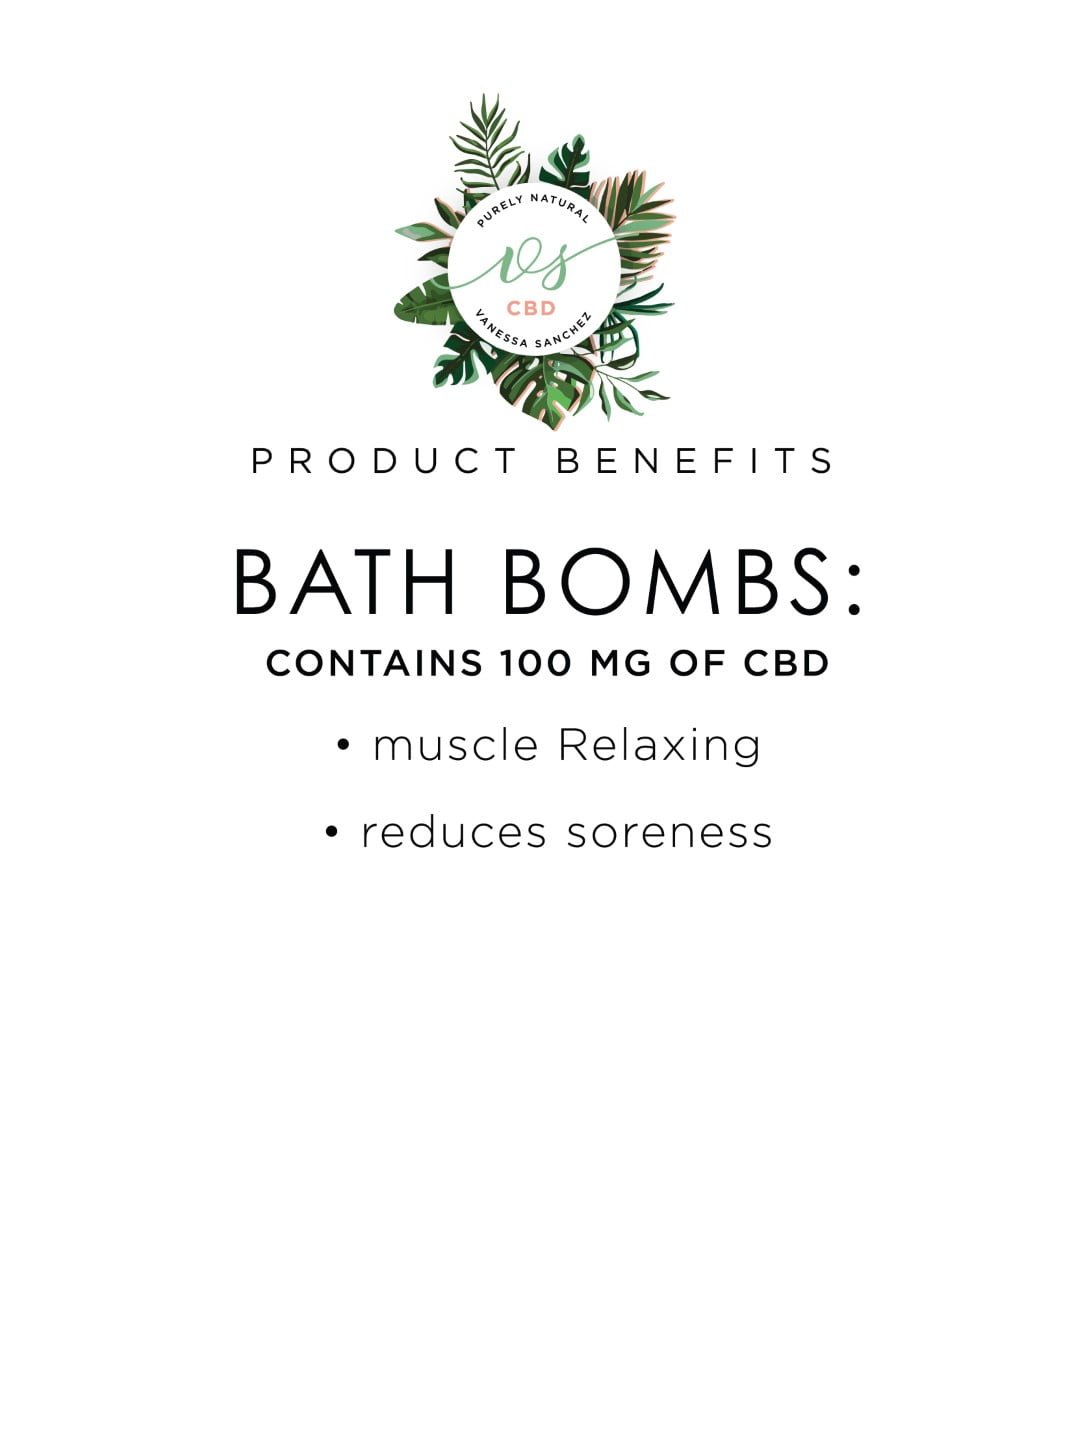 bath bombs benefits-01 (Large)